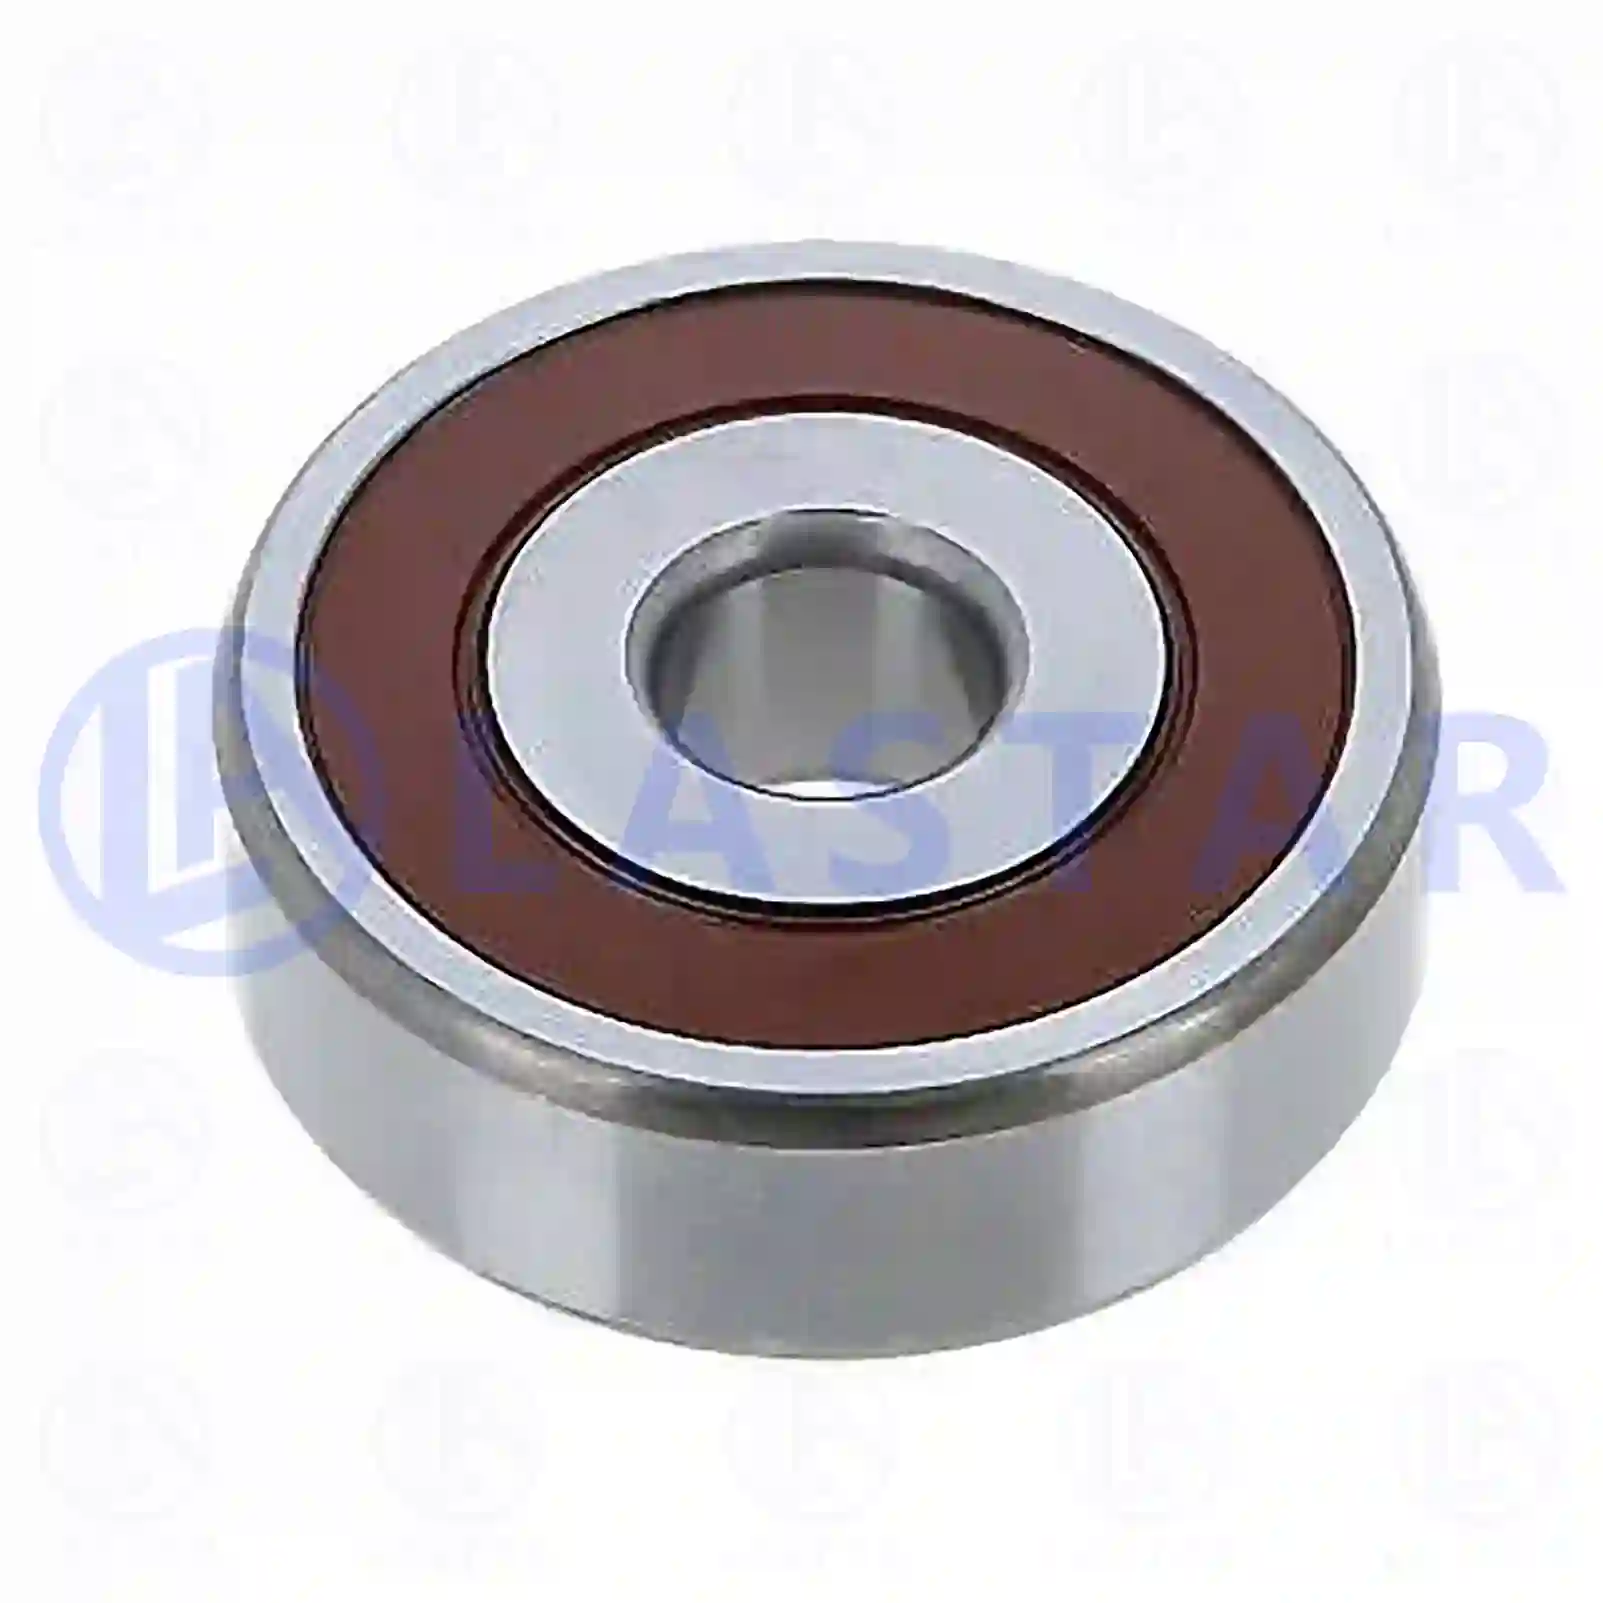 Alternator Ball bearing, la no: 77713330 ,  oem no:1387609, 3091567, Lastar Spare Part | Truck Spare Parts, Auotomotive Spare Parts